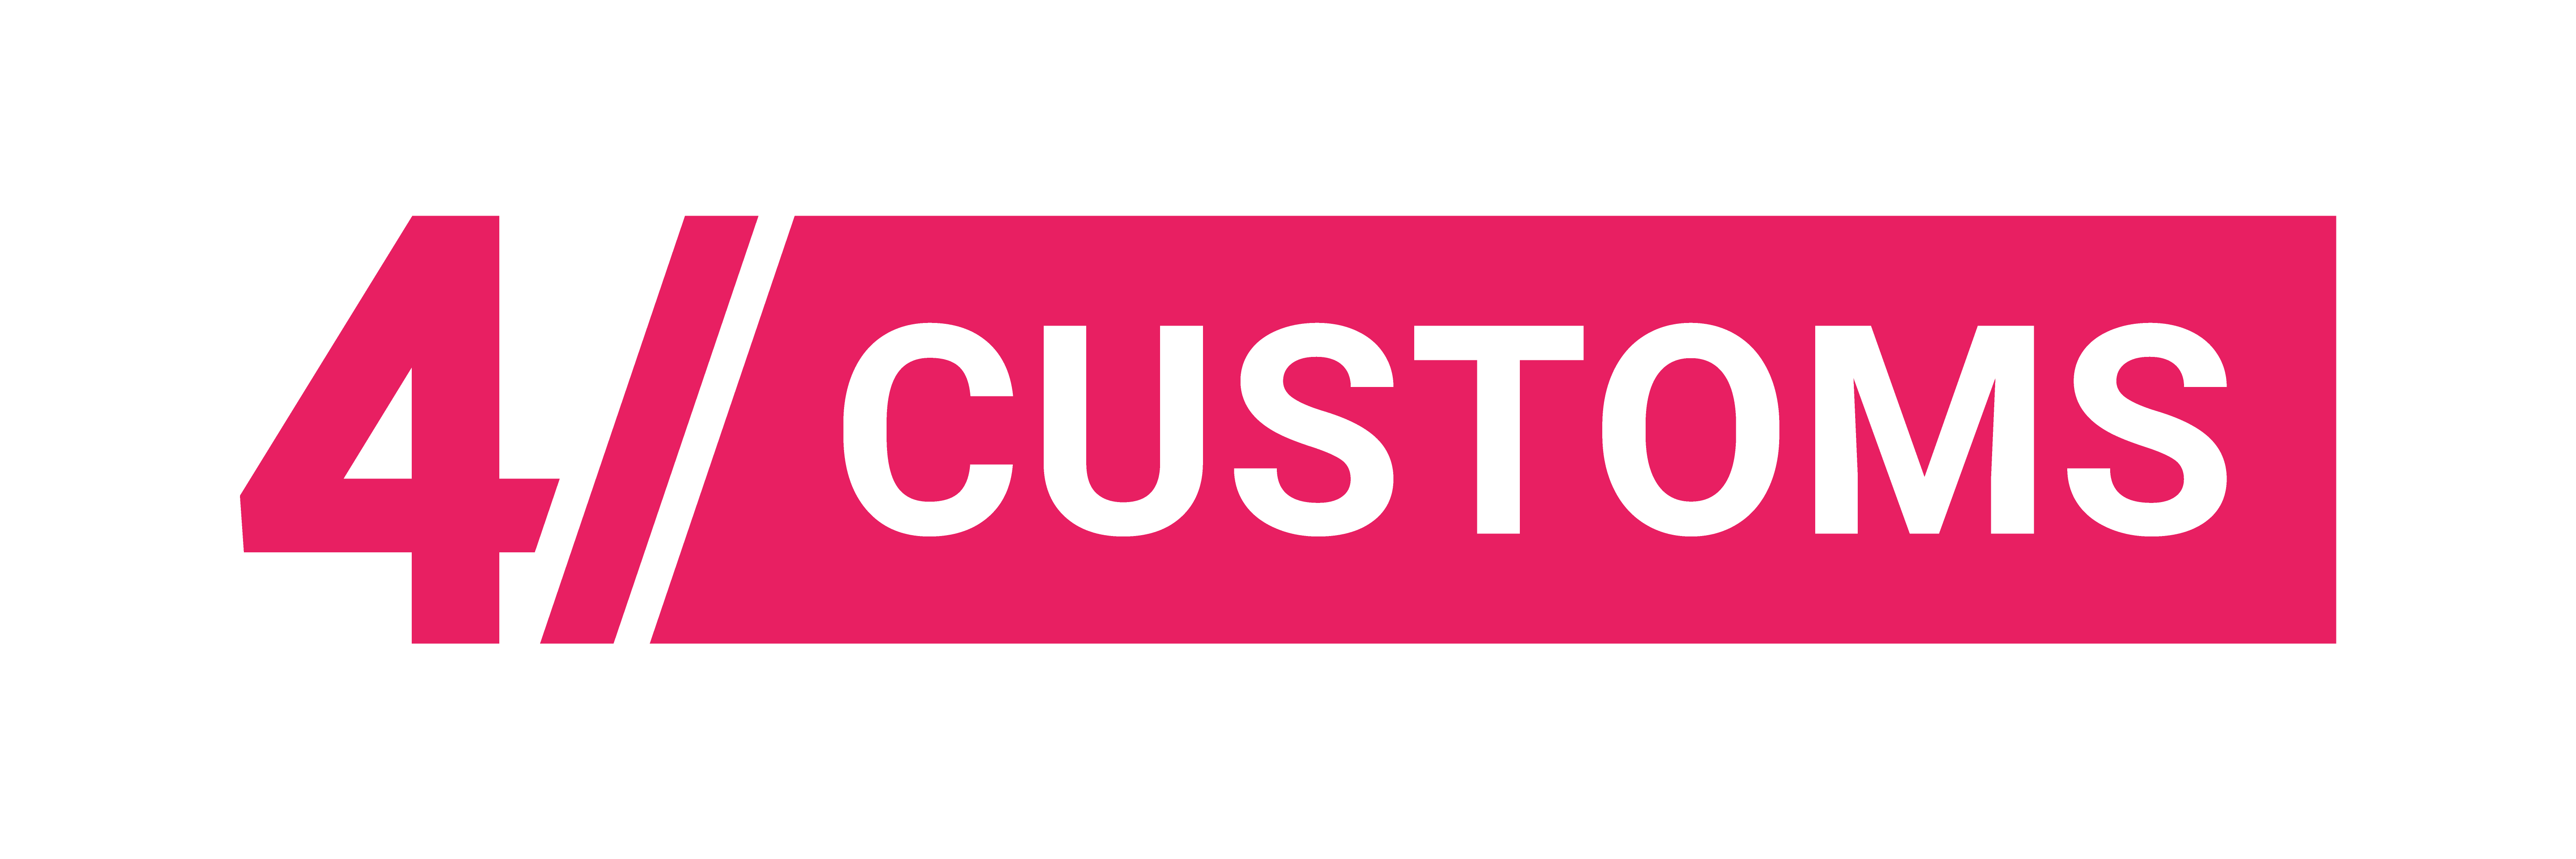 4/customs